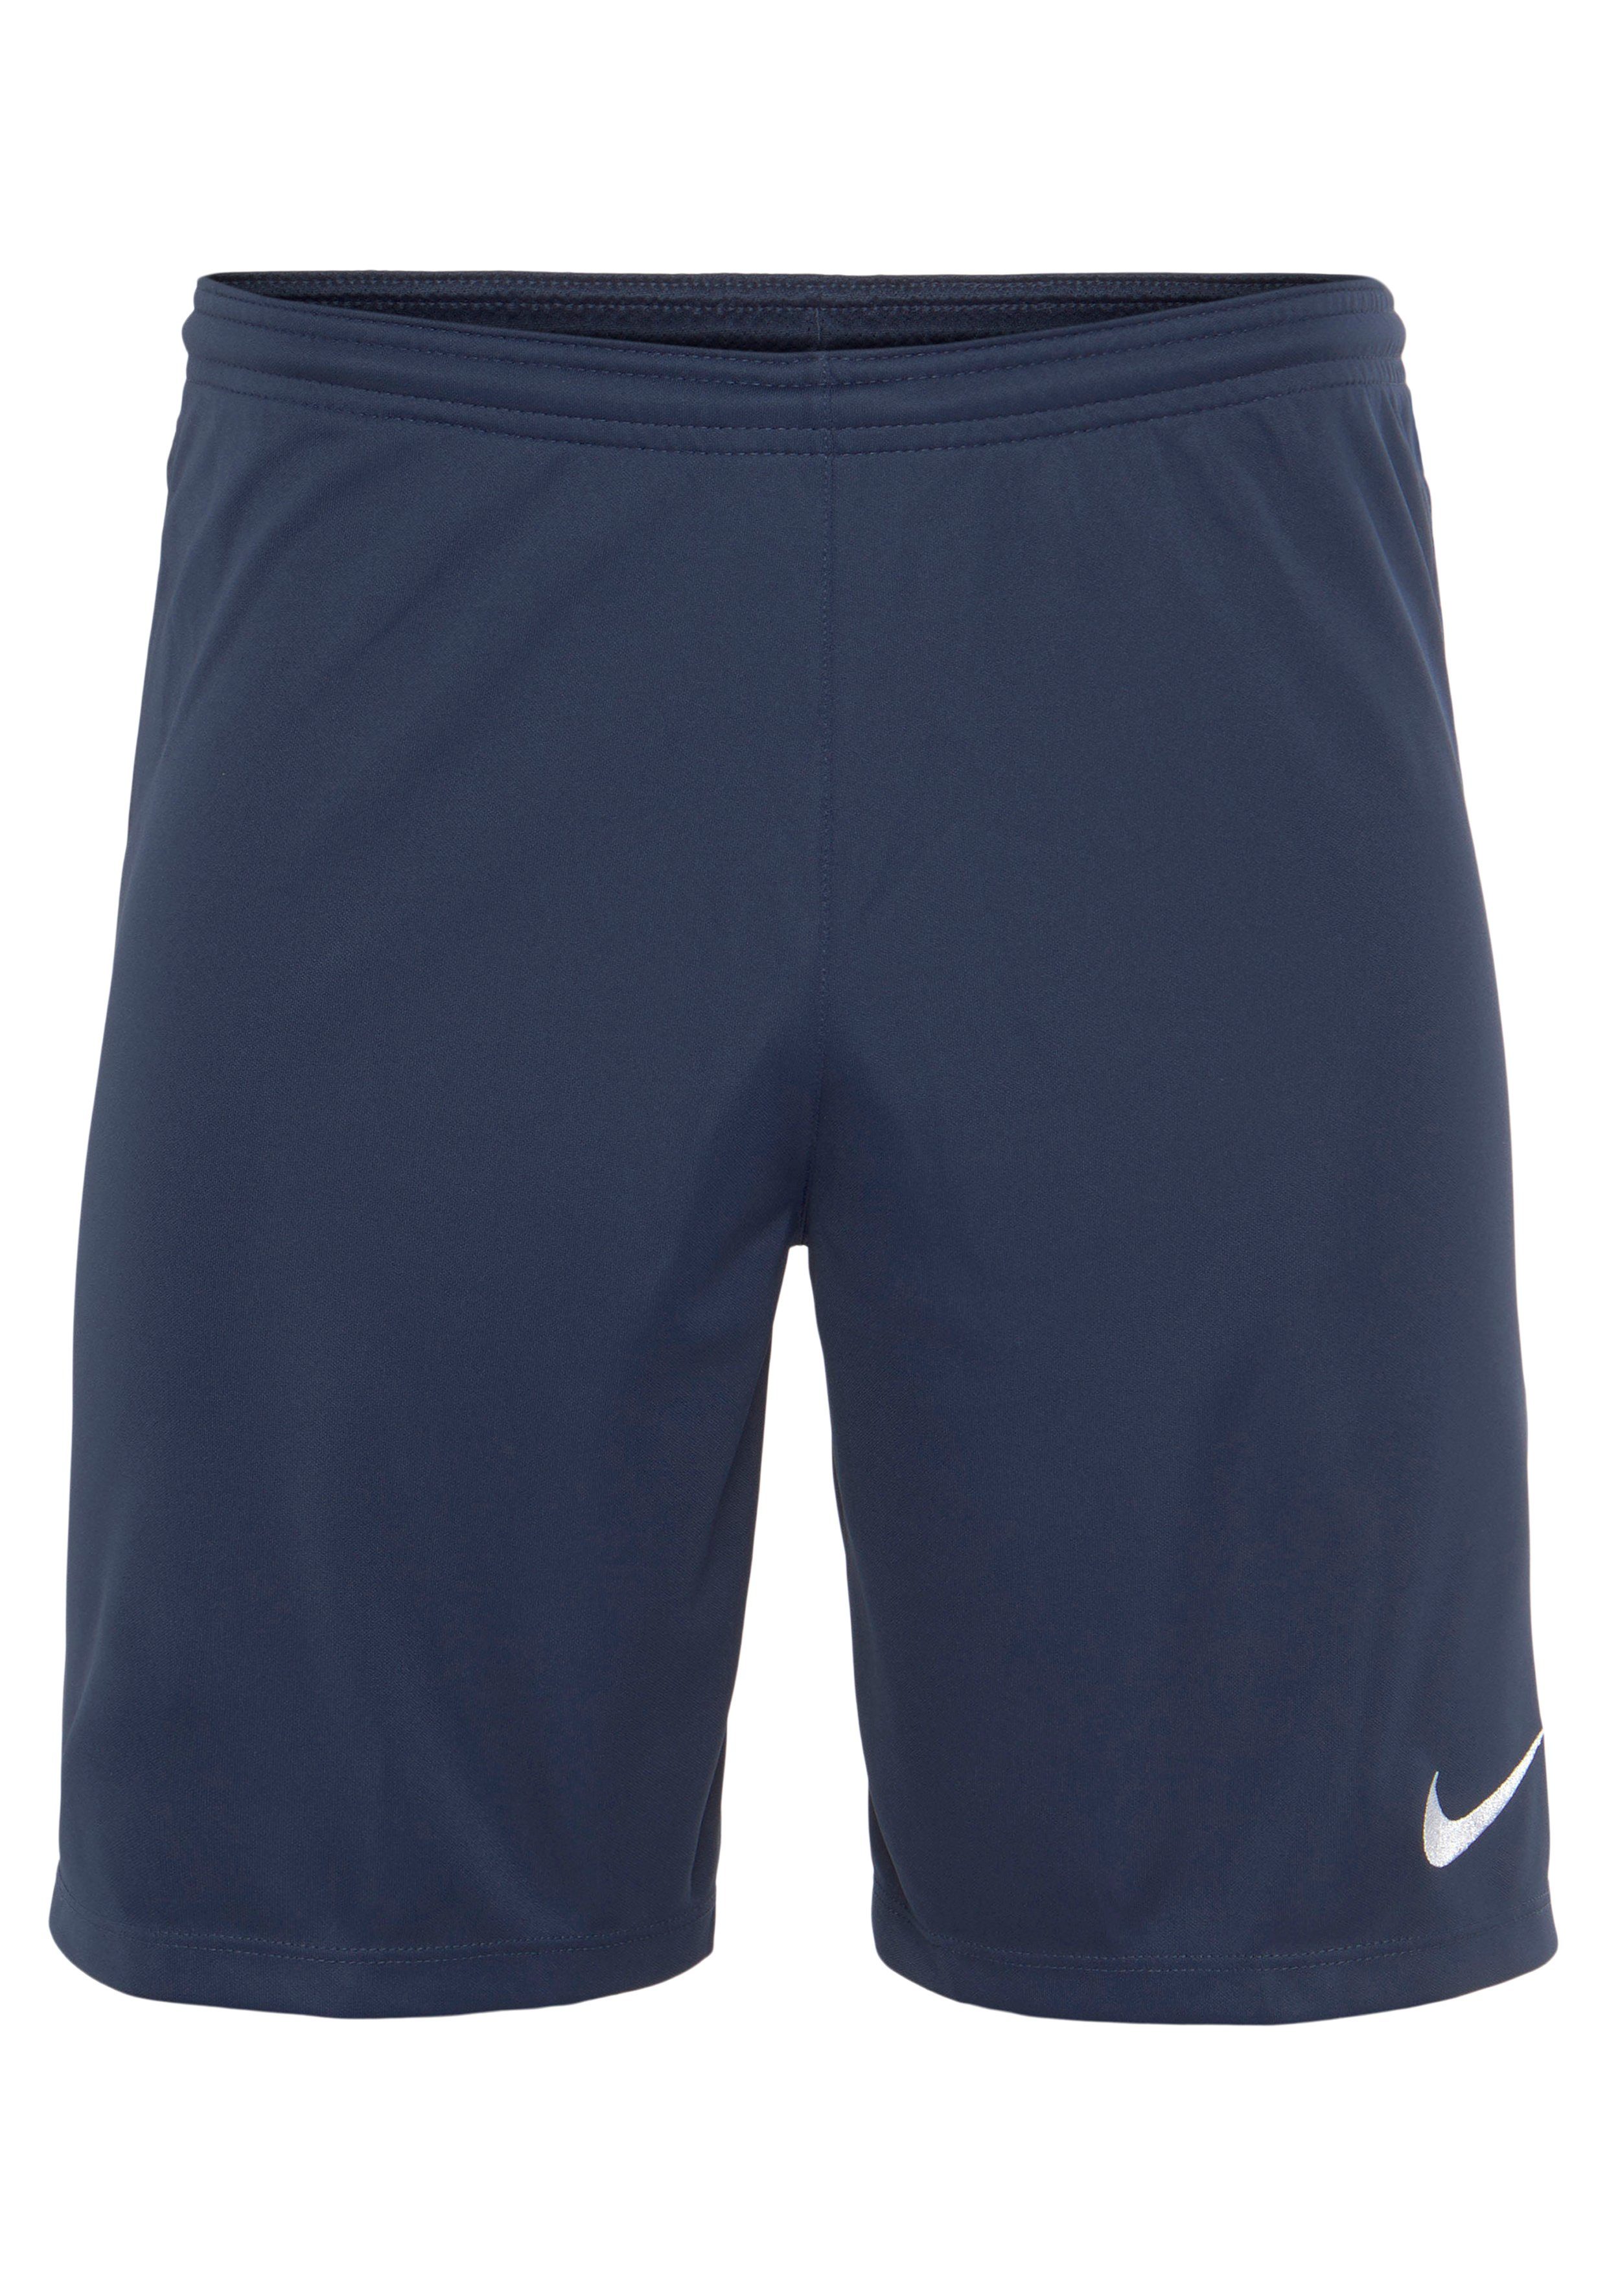 Nike Shorts navy League Short Knit Nike